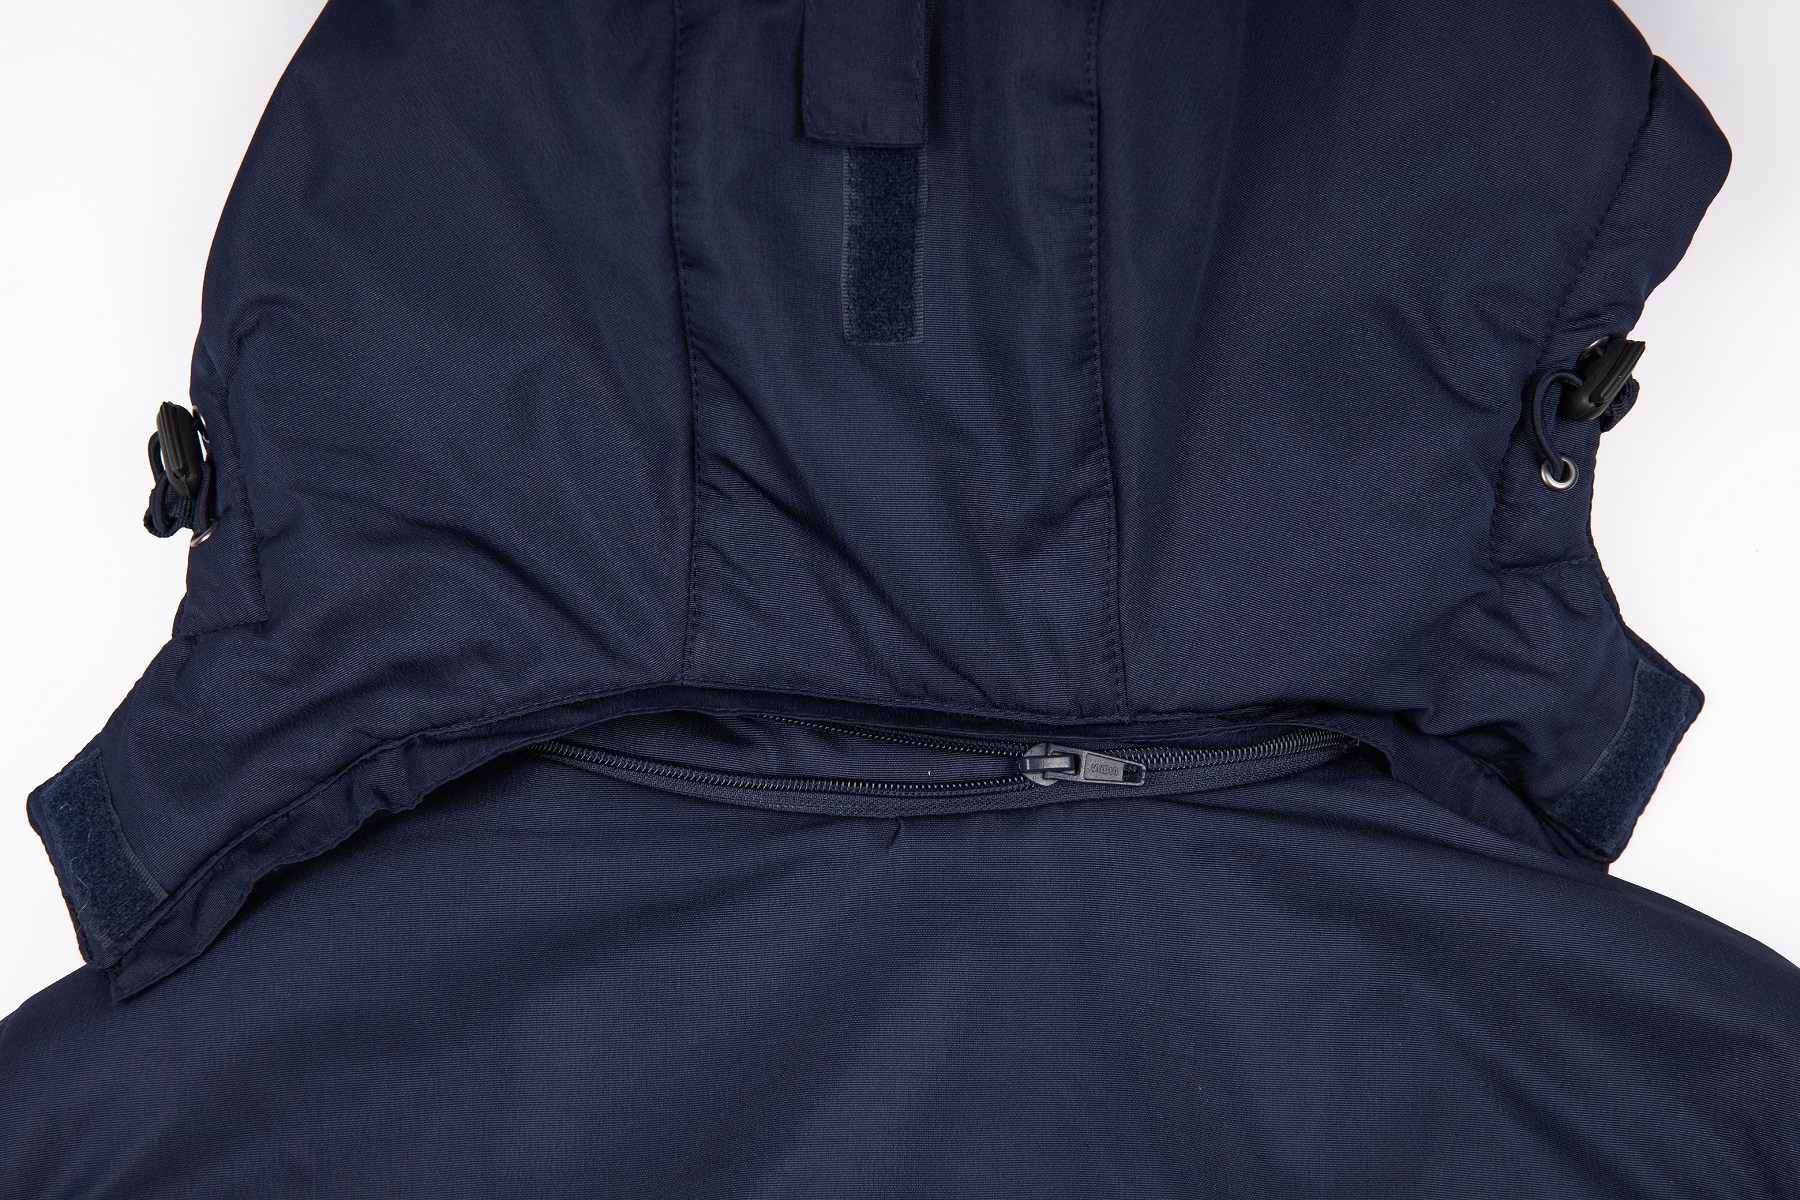 Куртка зимняя женская PROFLINE SPECIALIST (тк.Таслан), серый/т.синий